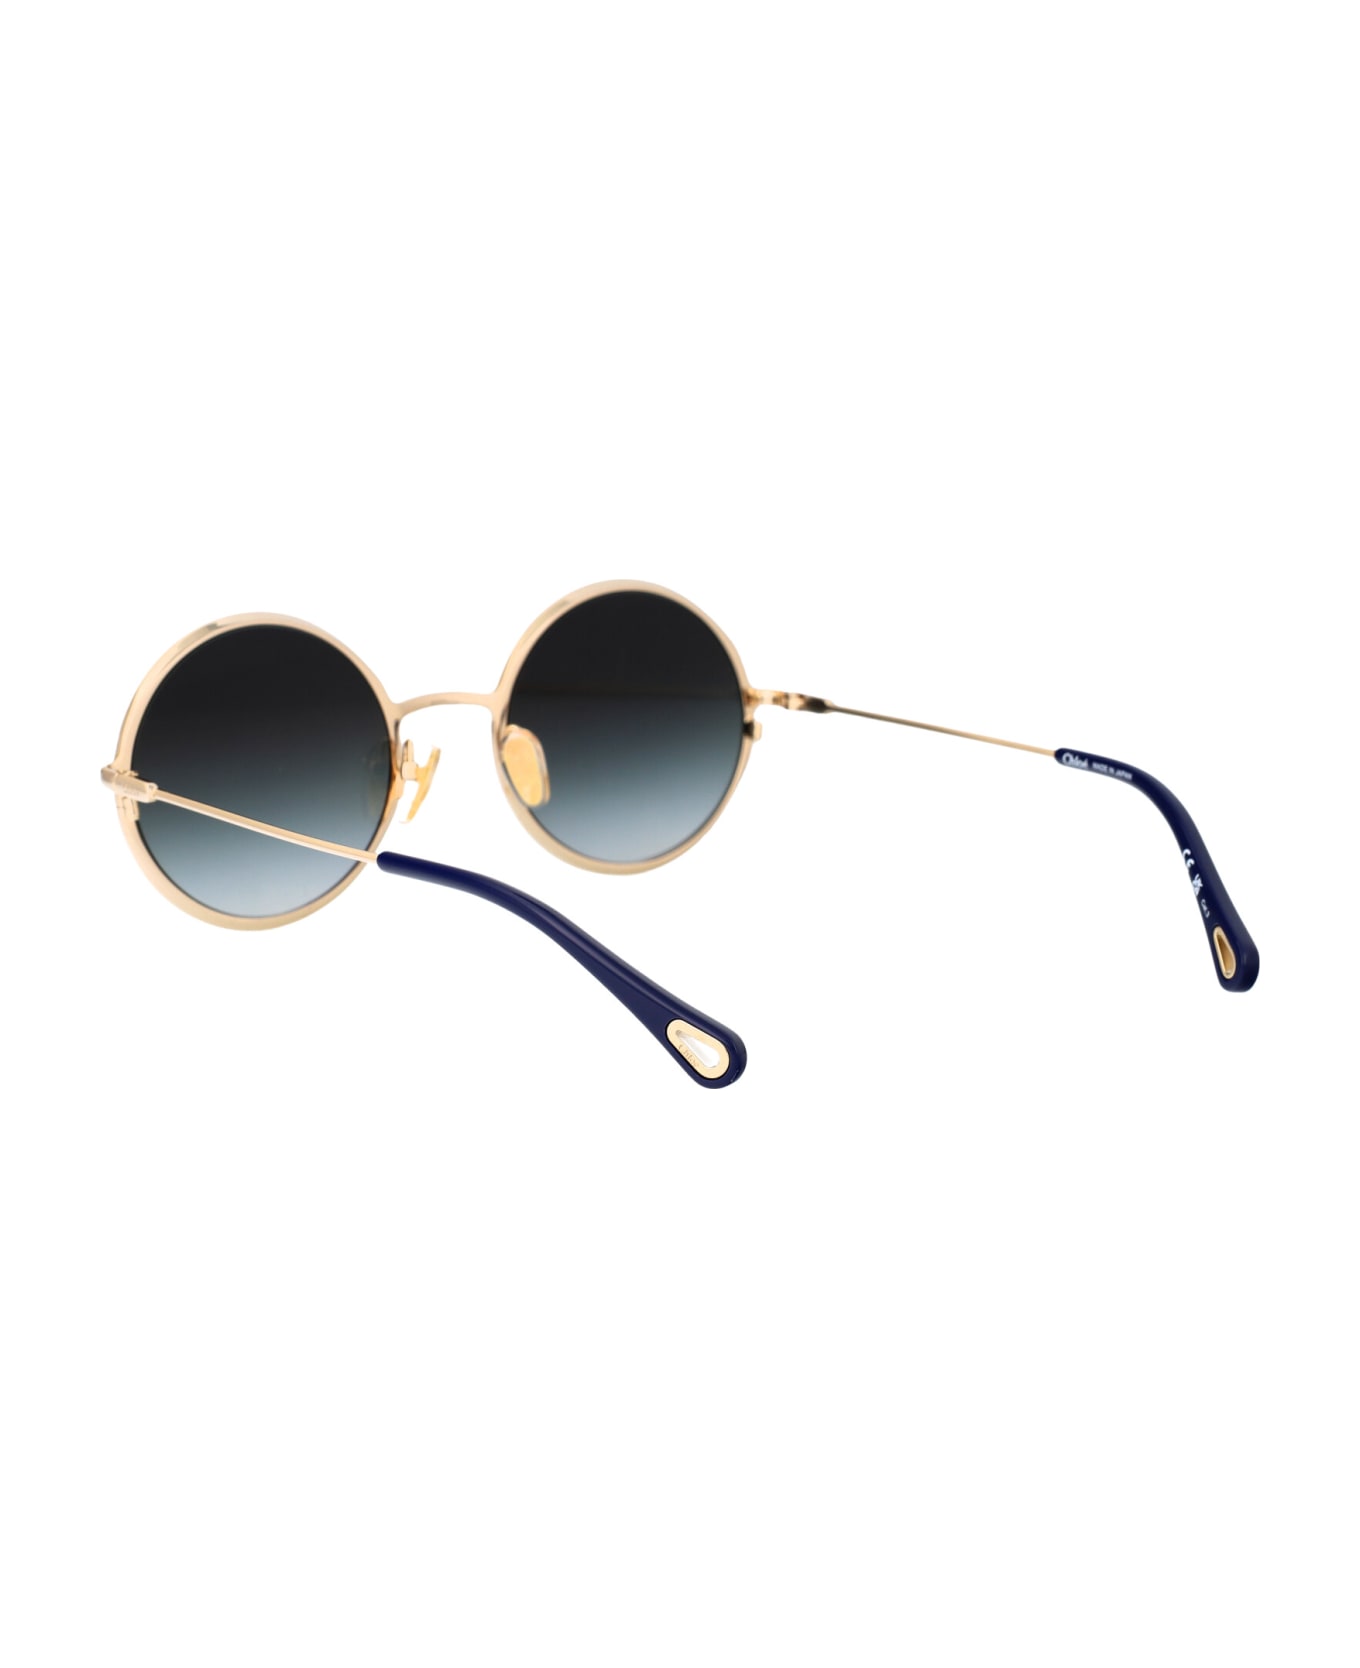 Chloé Eyewear Ch0230s Sunglasses - 004 GOLD GOLD GREY